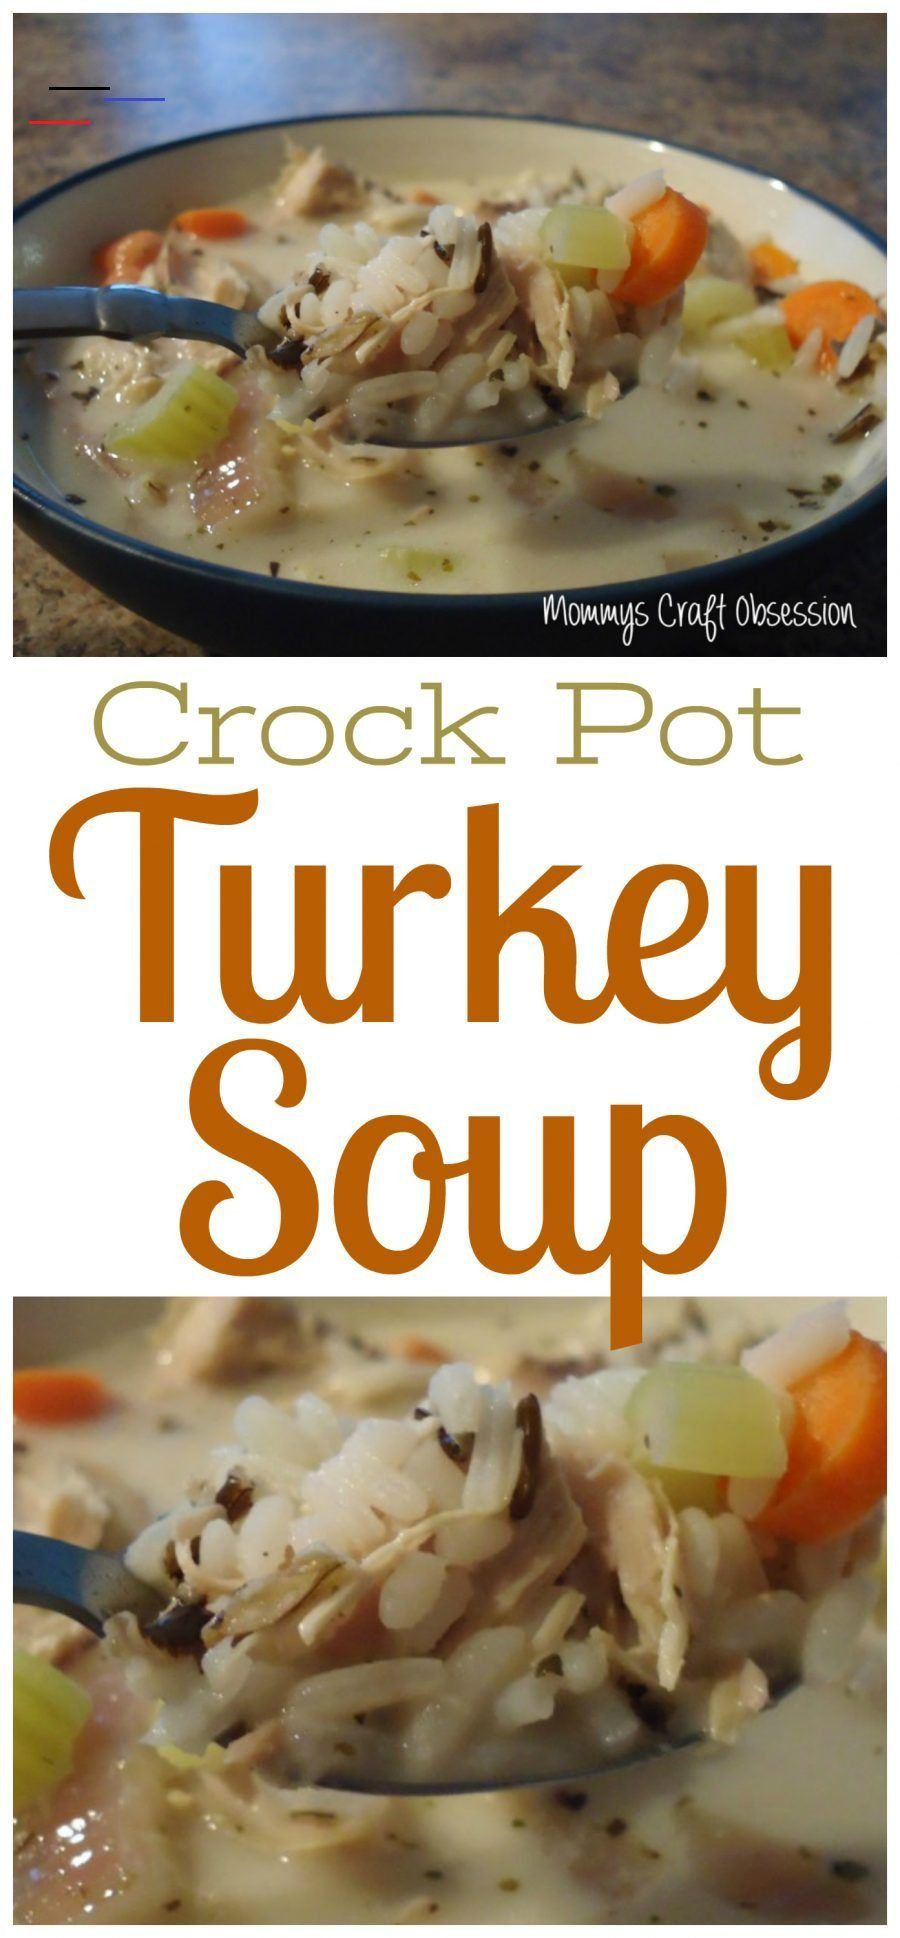 Leftover Turkey Soup Crock Pot
 Crock Pot Turkey Soup Recipe turkeysoup in 2020